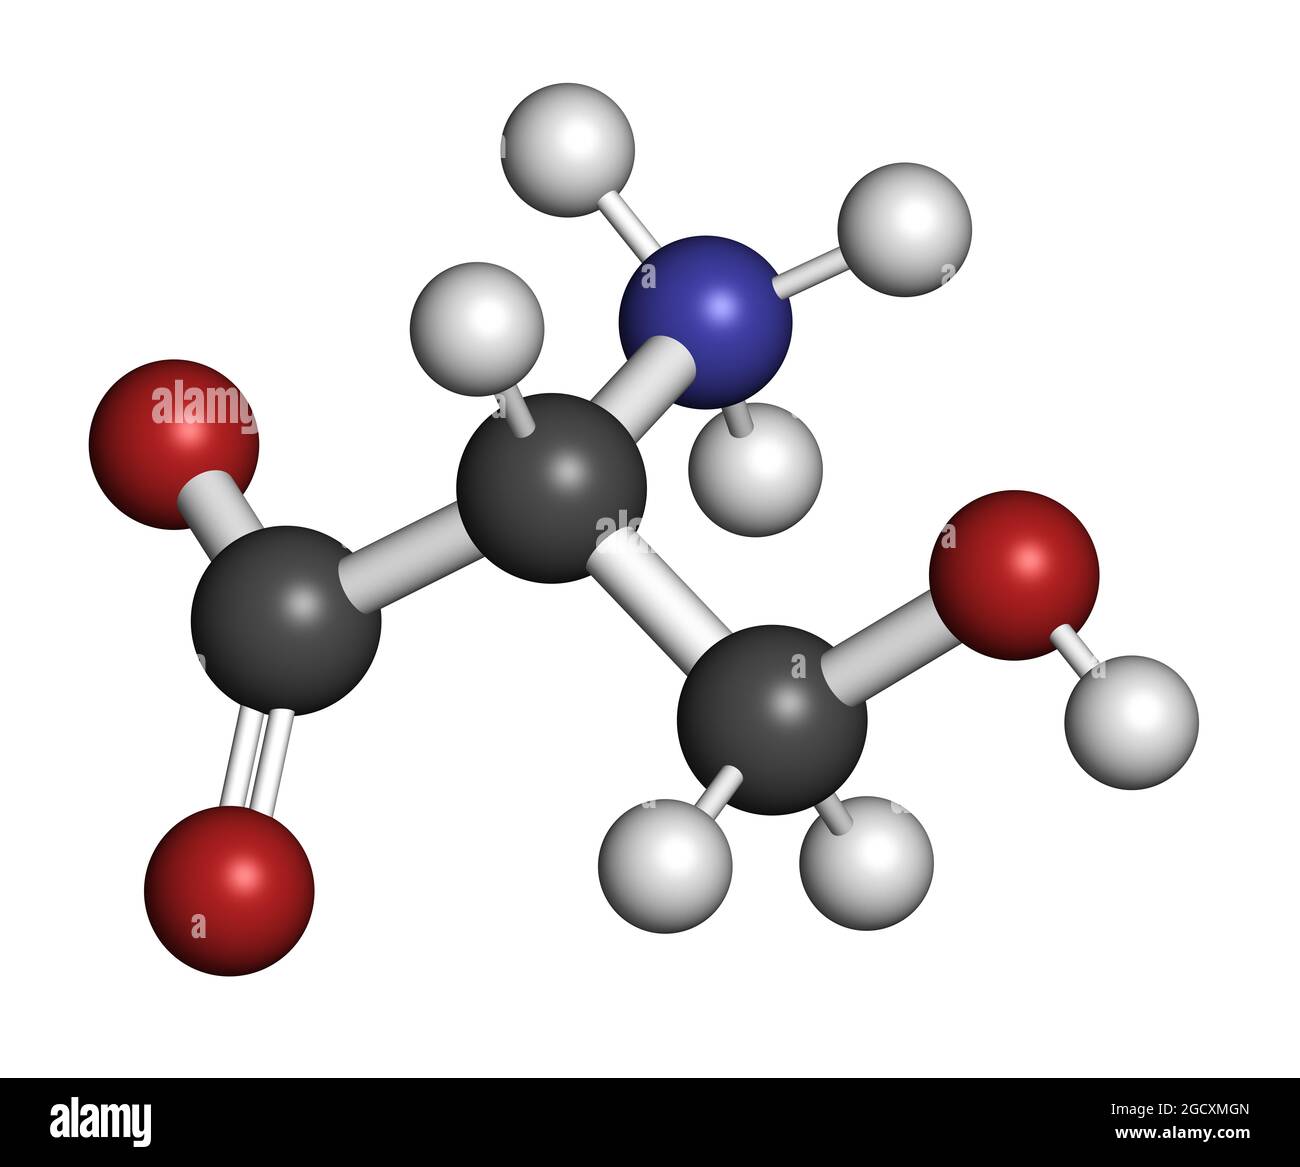 D-serine amino acid molecule. Enantiomer of L-serine. 3D rendering. Stock Photo